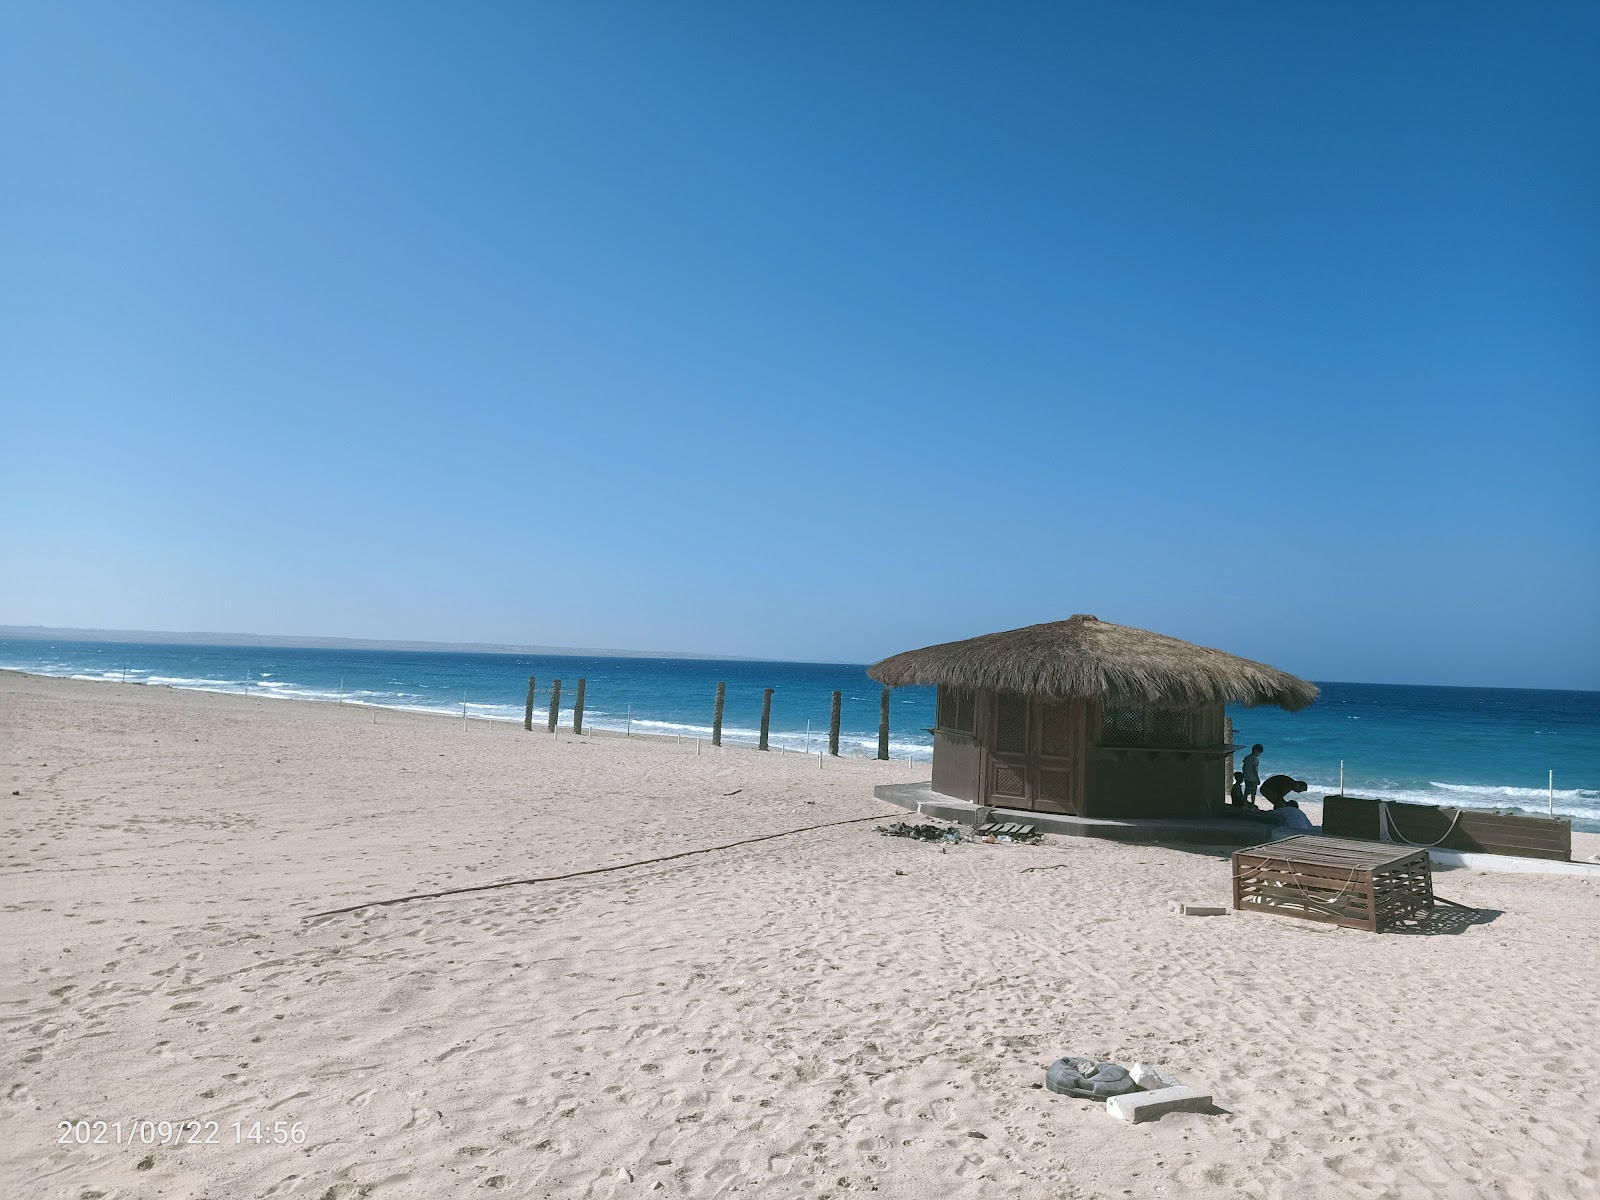 Foto de Al Rawan Resort Beach com praia espaçosa